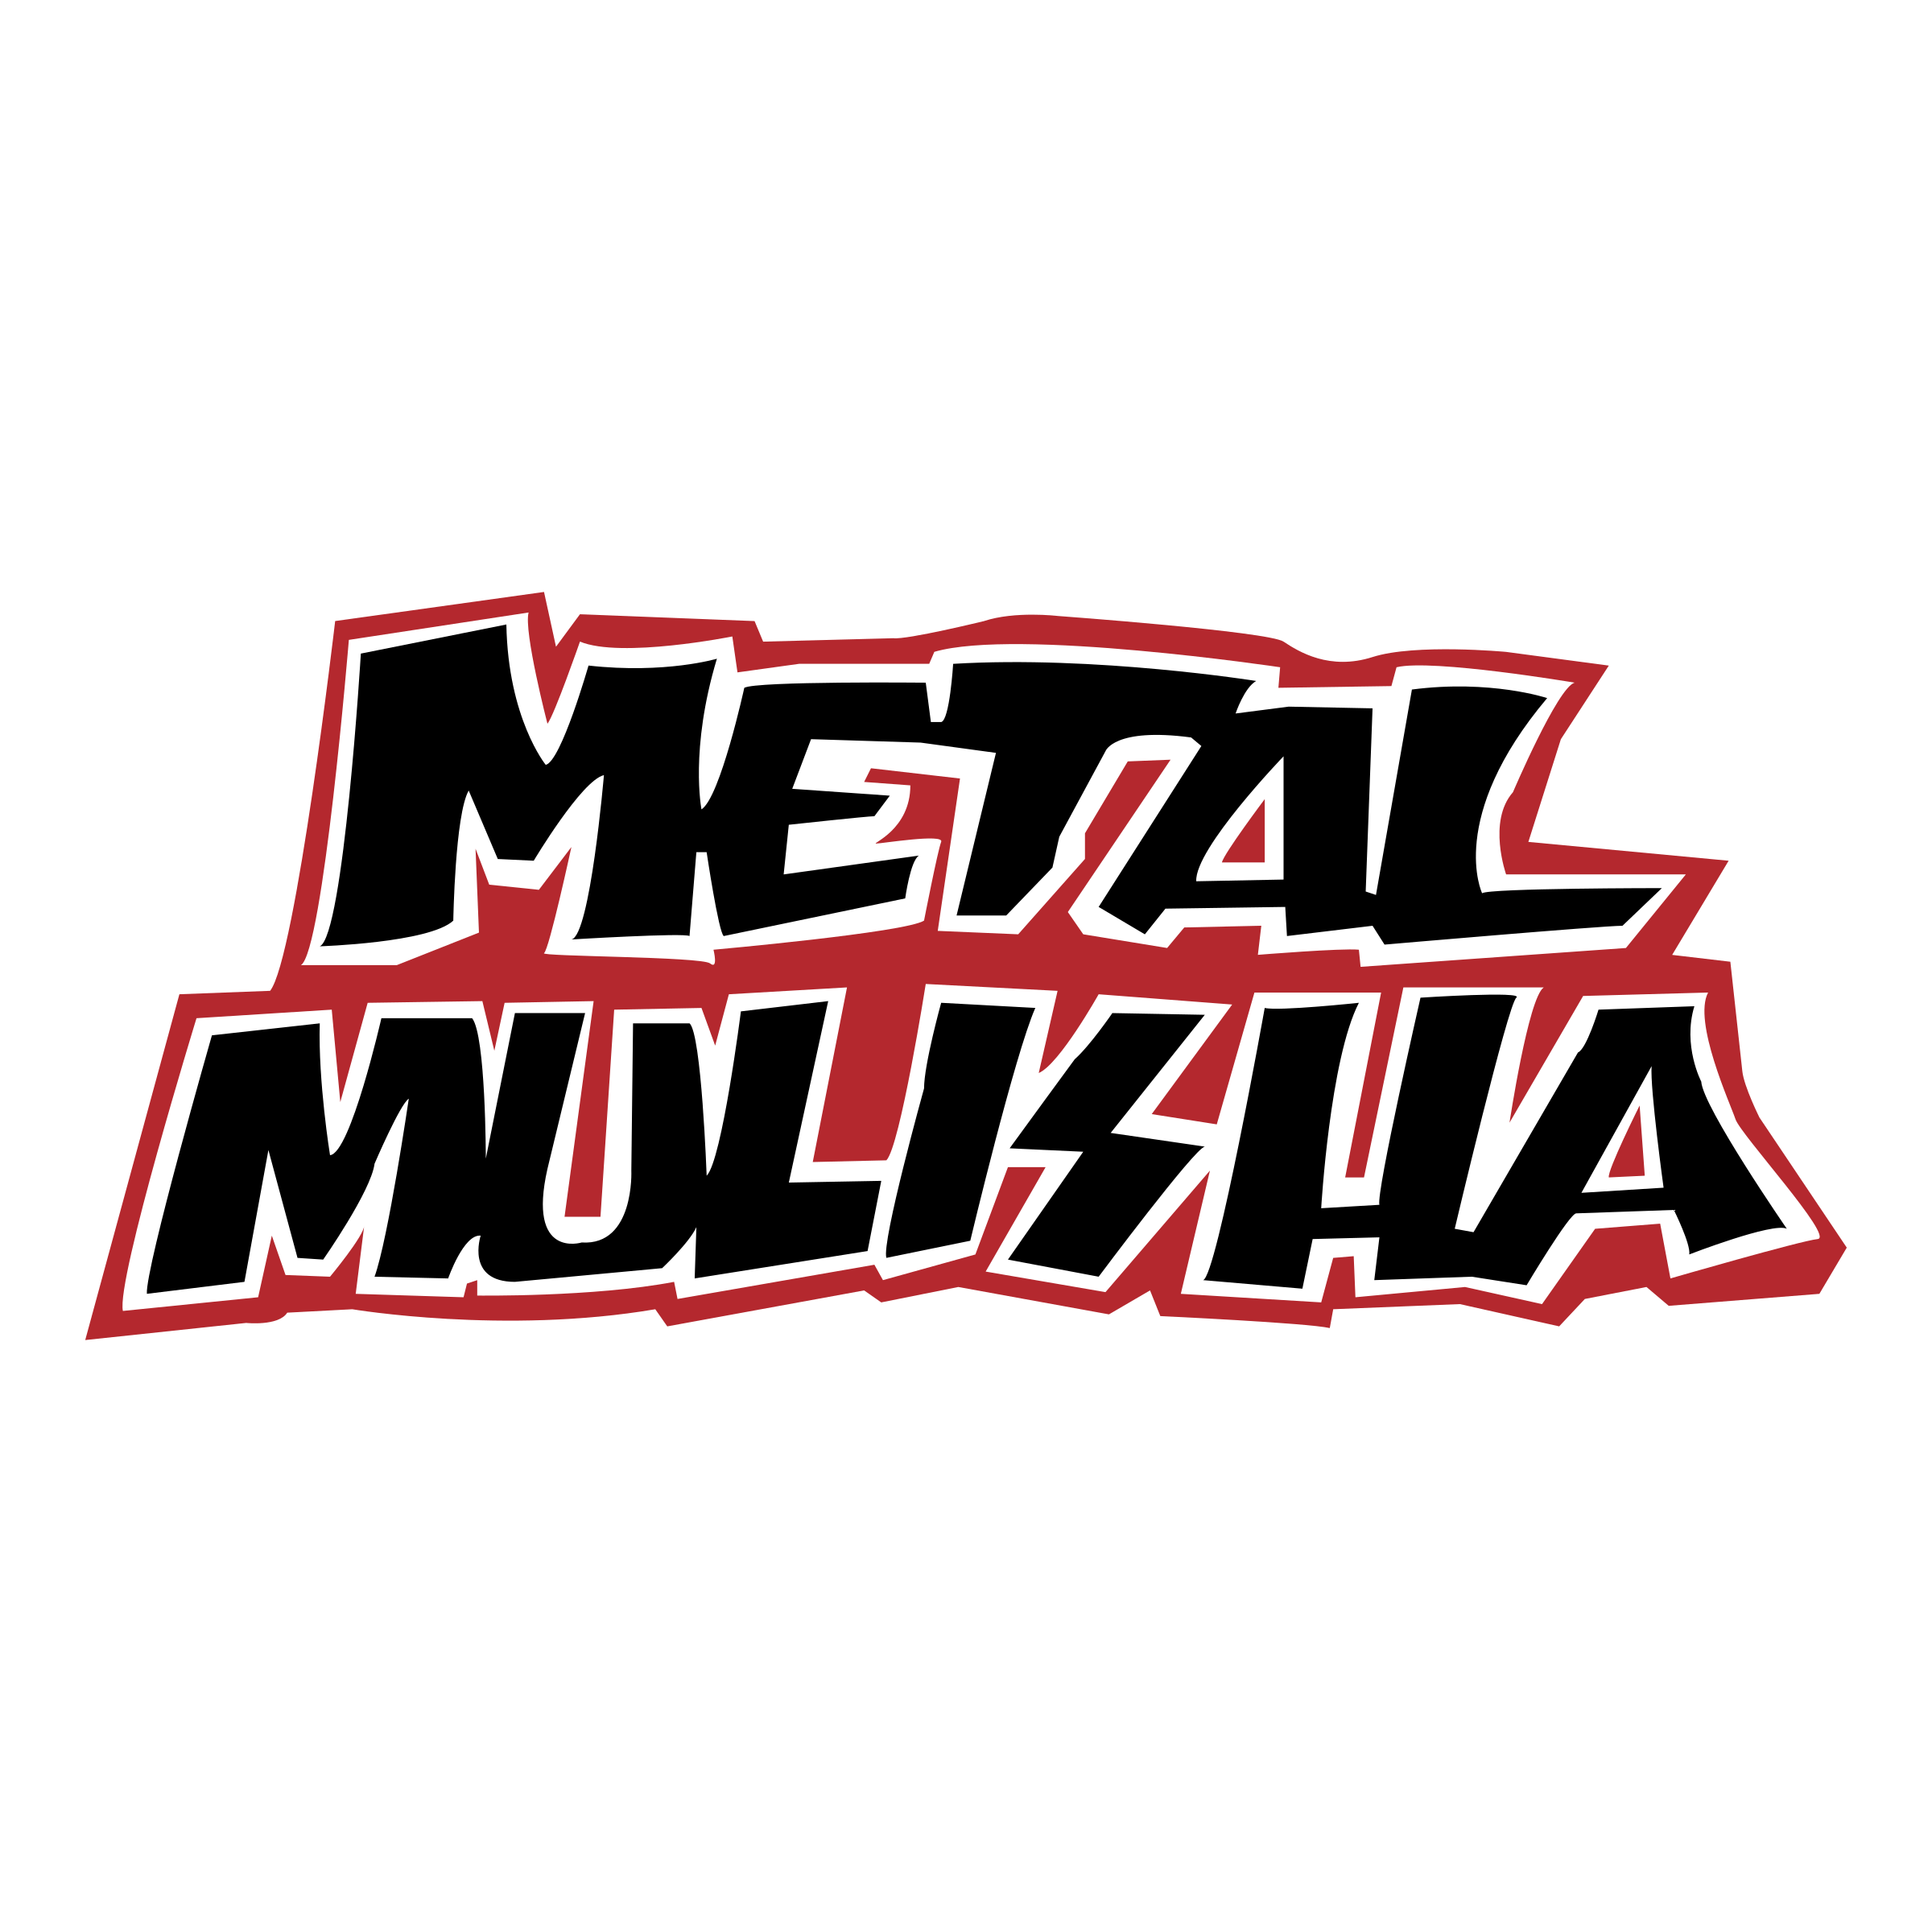 Metal Mulisha Logo - Metal Mulisha Logo PNG Transparent & SVG Vector - Freebie Supply